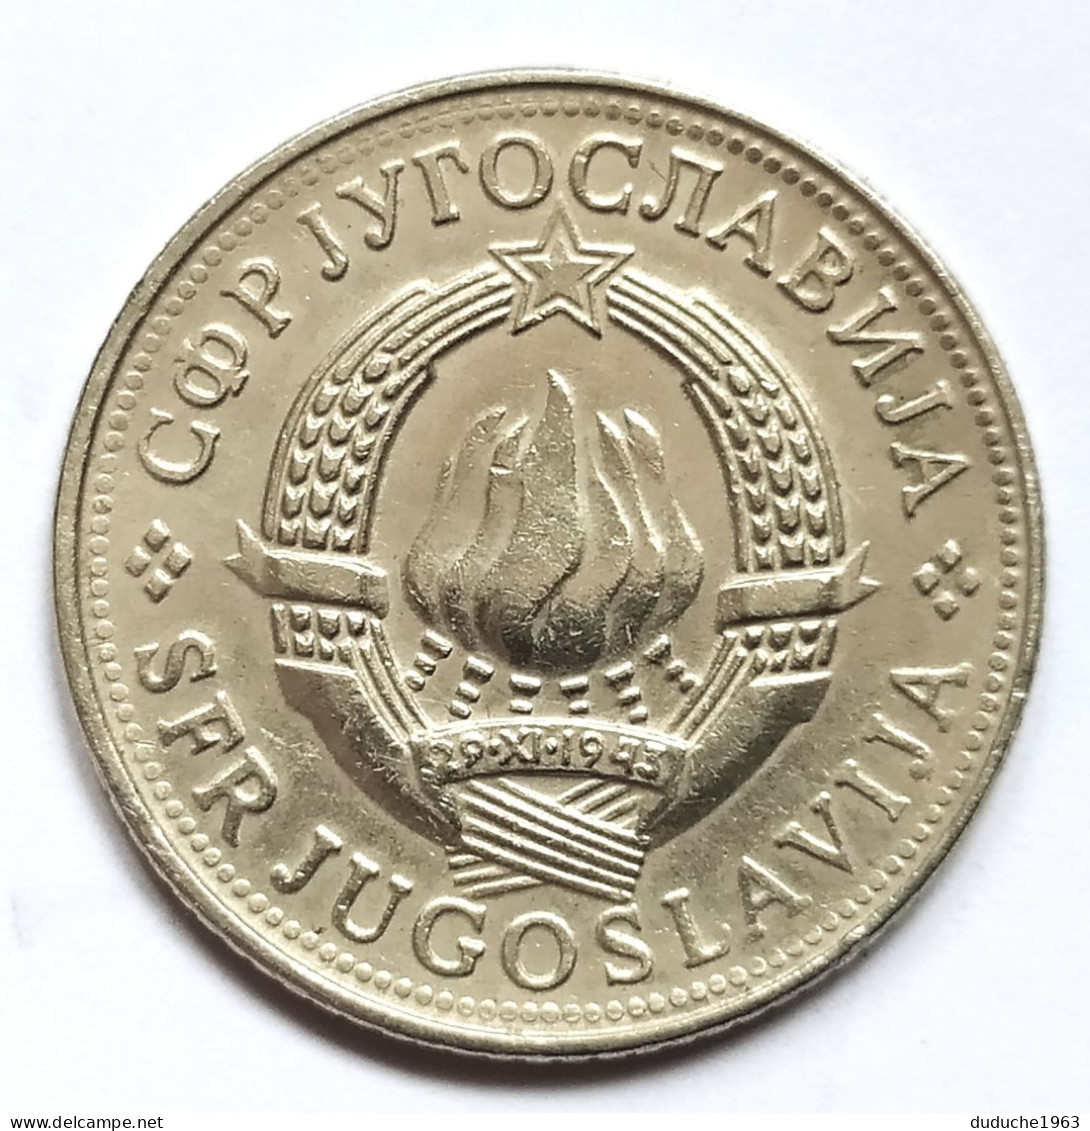 Yougoslavie - 5 Dinar 1981 - Yugoslavia